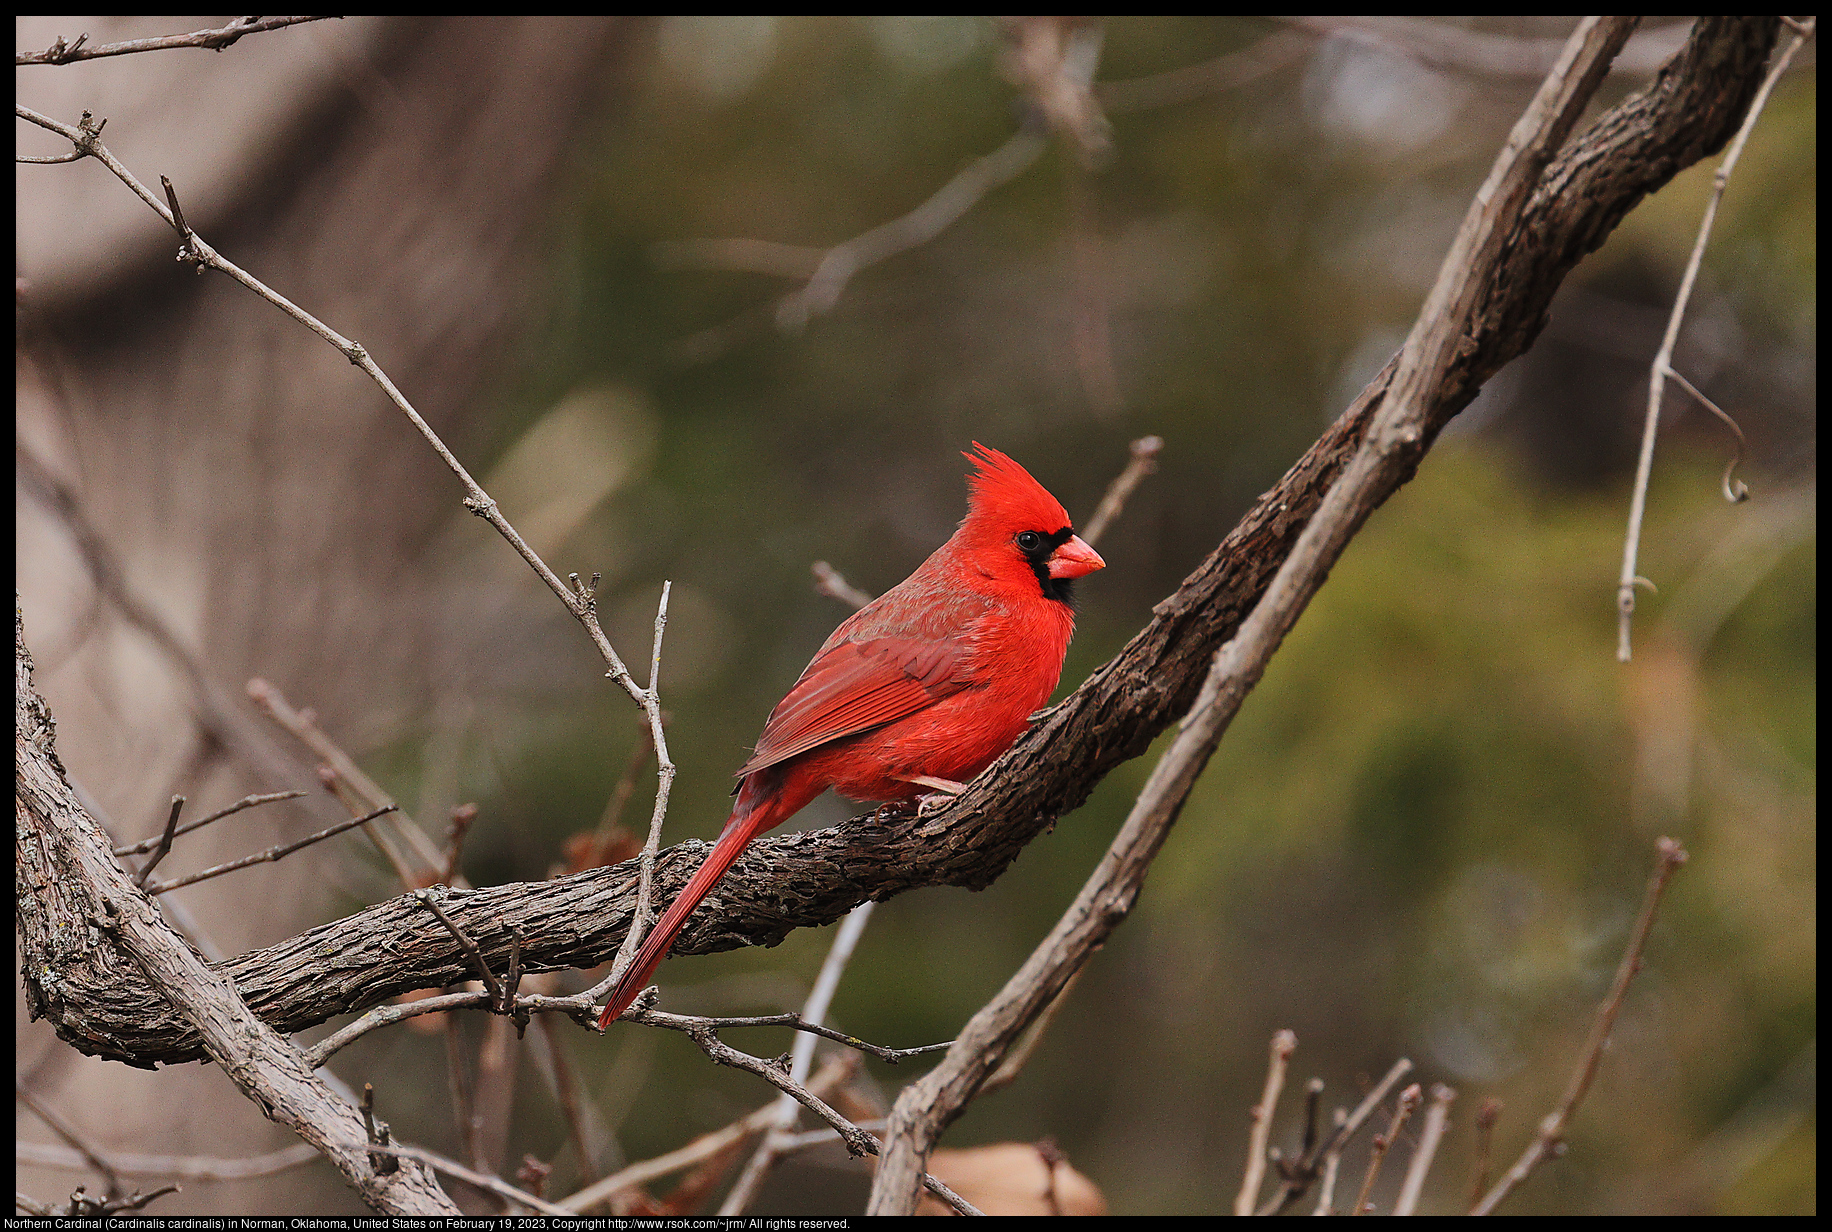 Northern Cardinal (Cardinalis cardinalis) in Norman, Oklahoma, United States on February 19, 2023